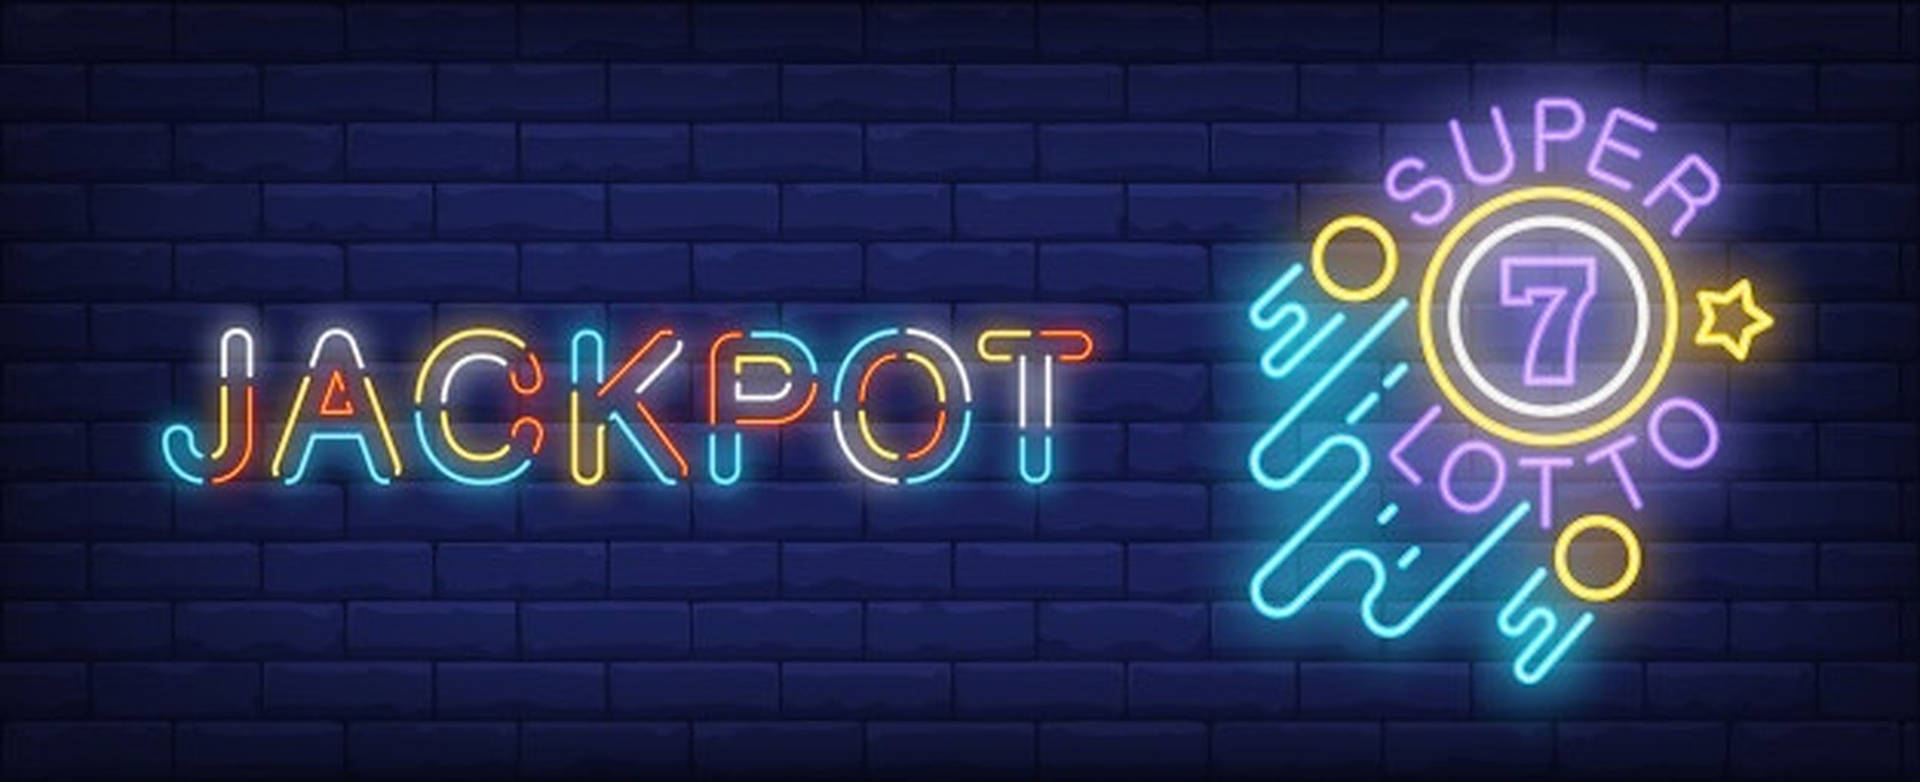 Lottery Jackpot Neon Signage Background